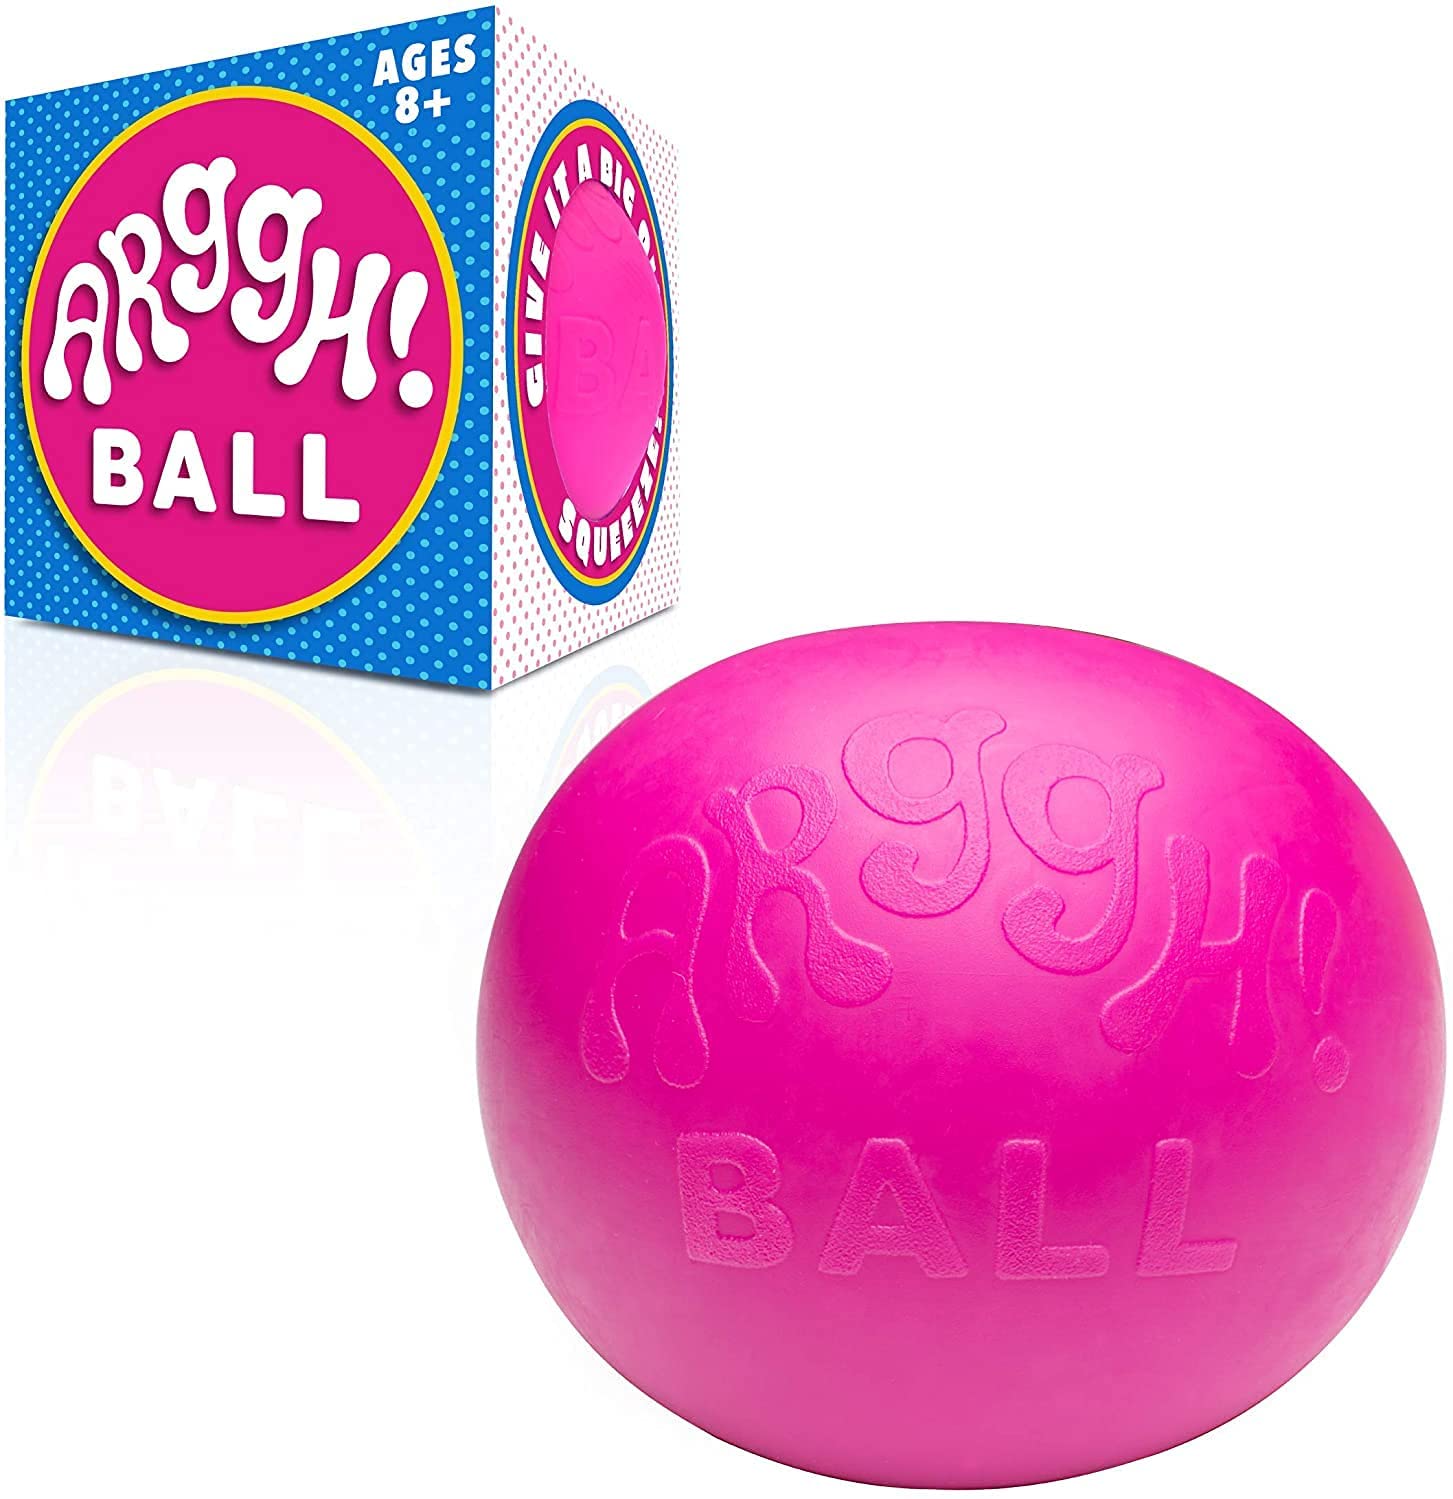 Arggh Giant Sensory Stress Ball